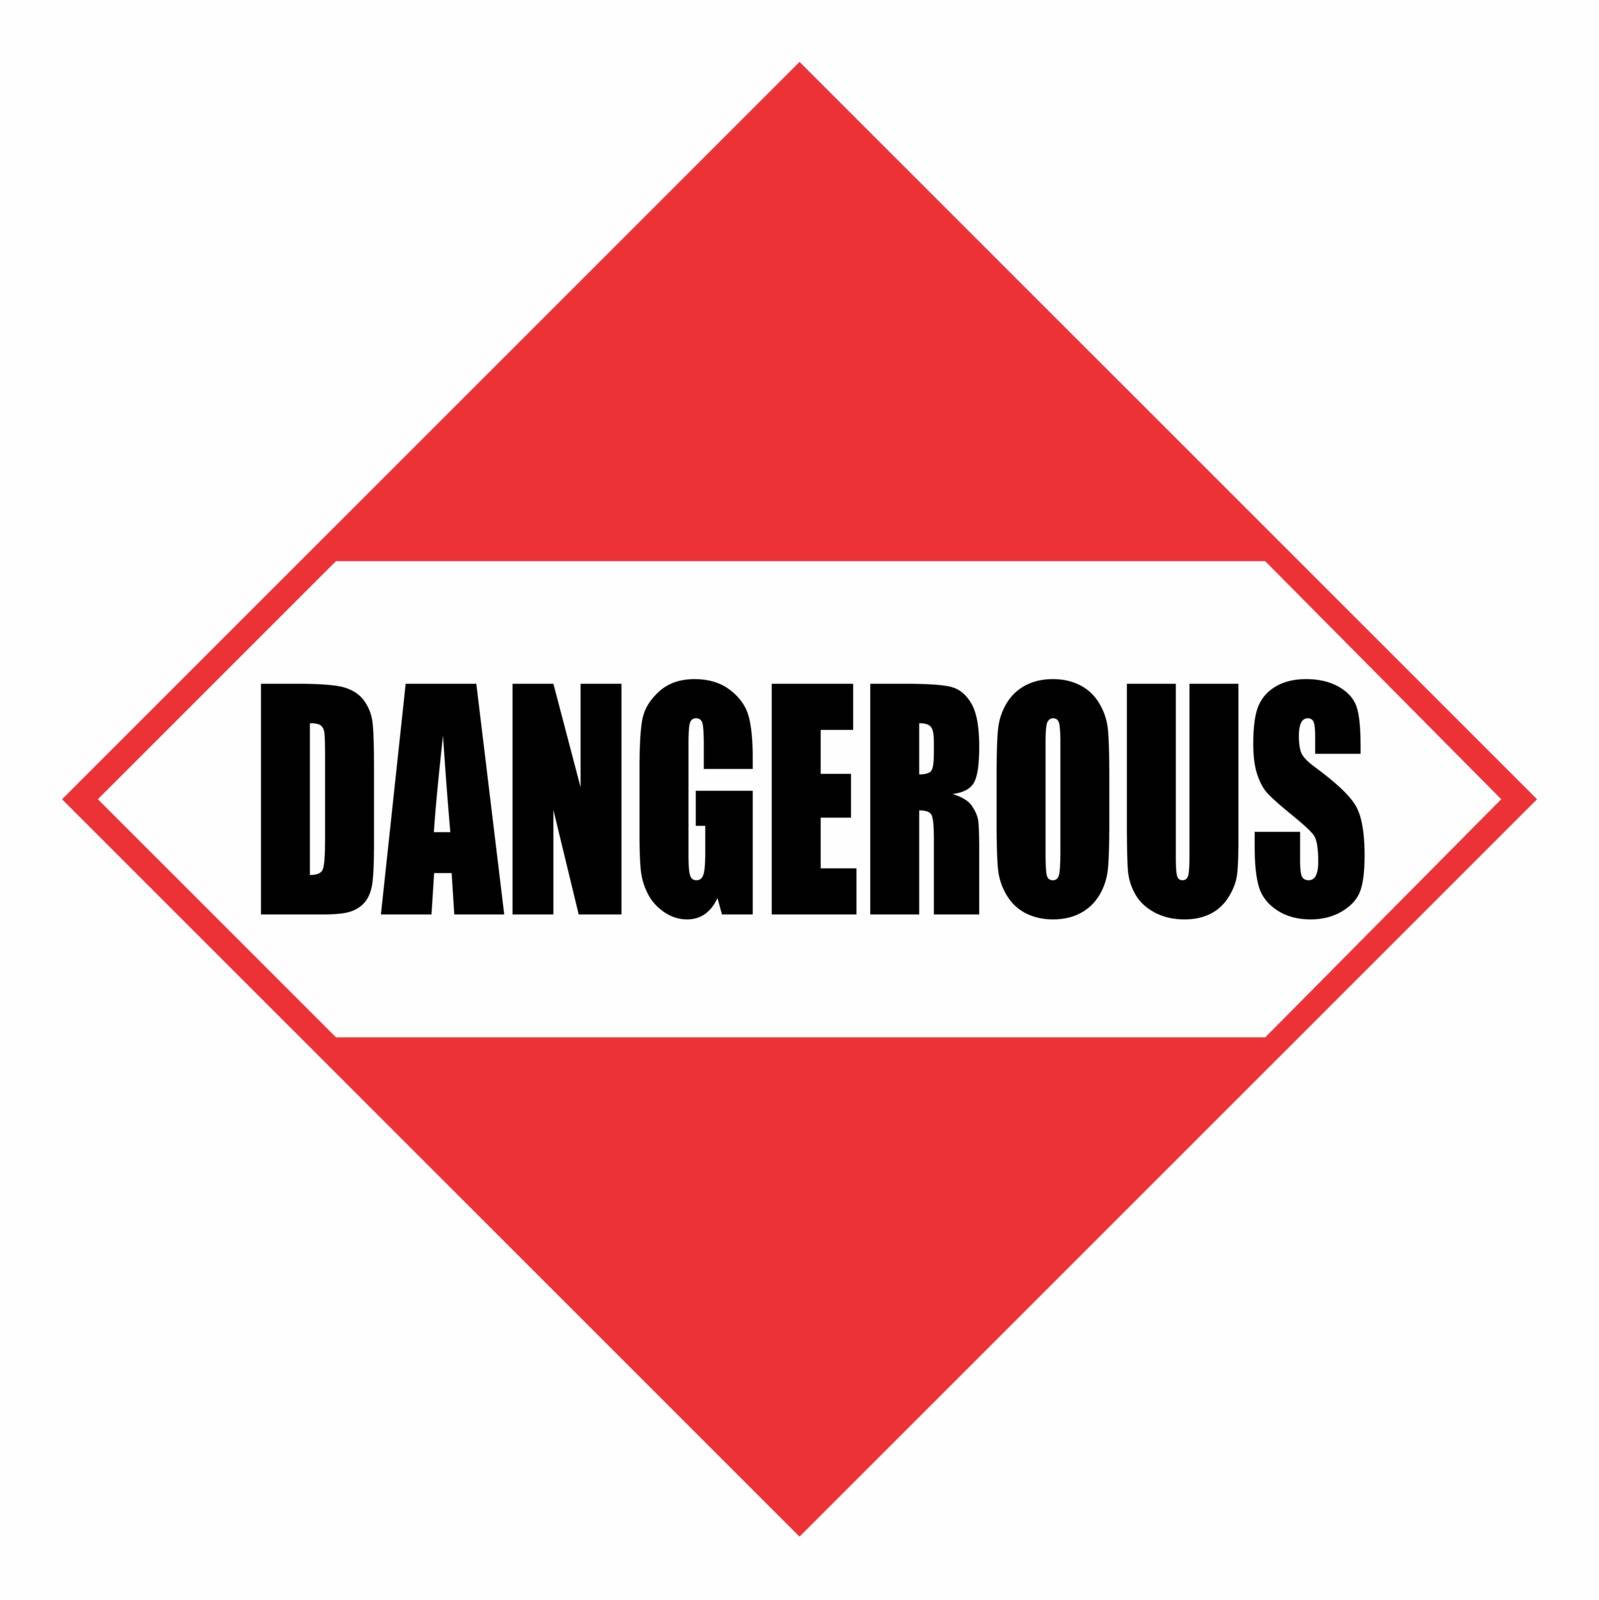 Dangerous sign illustration by luisrftc